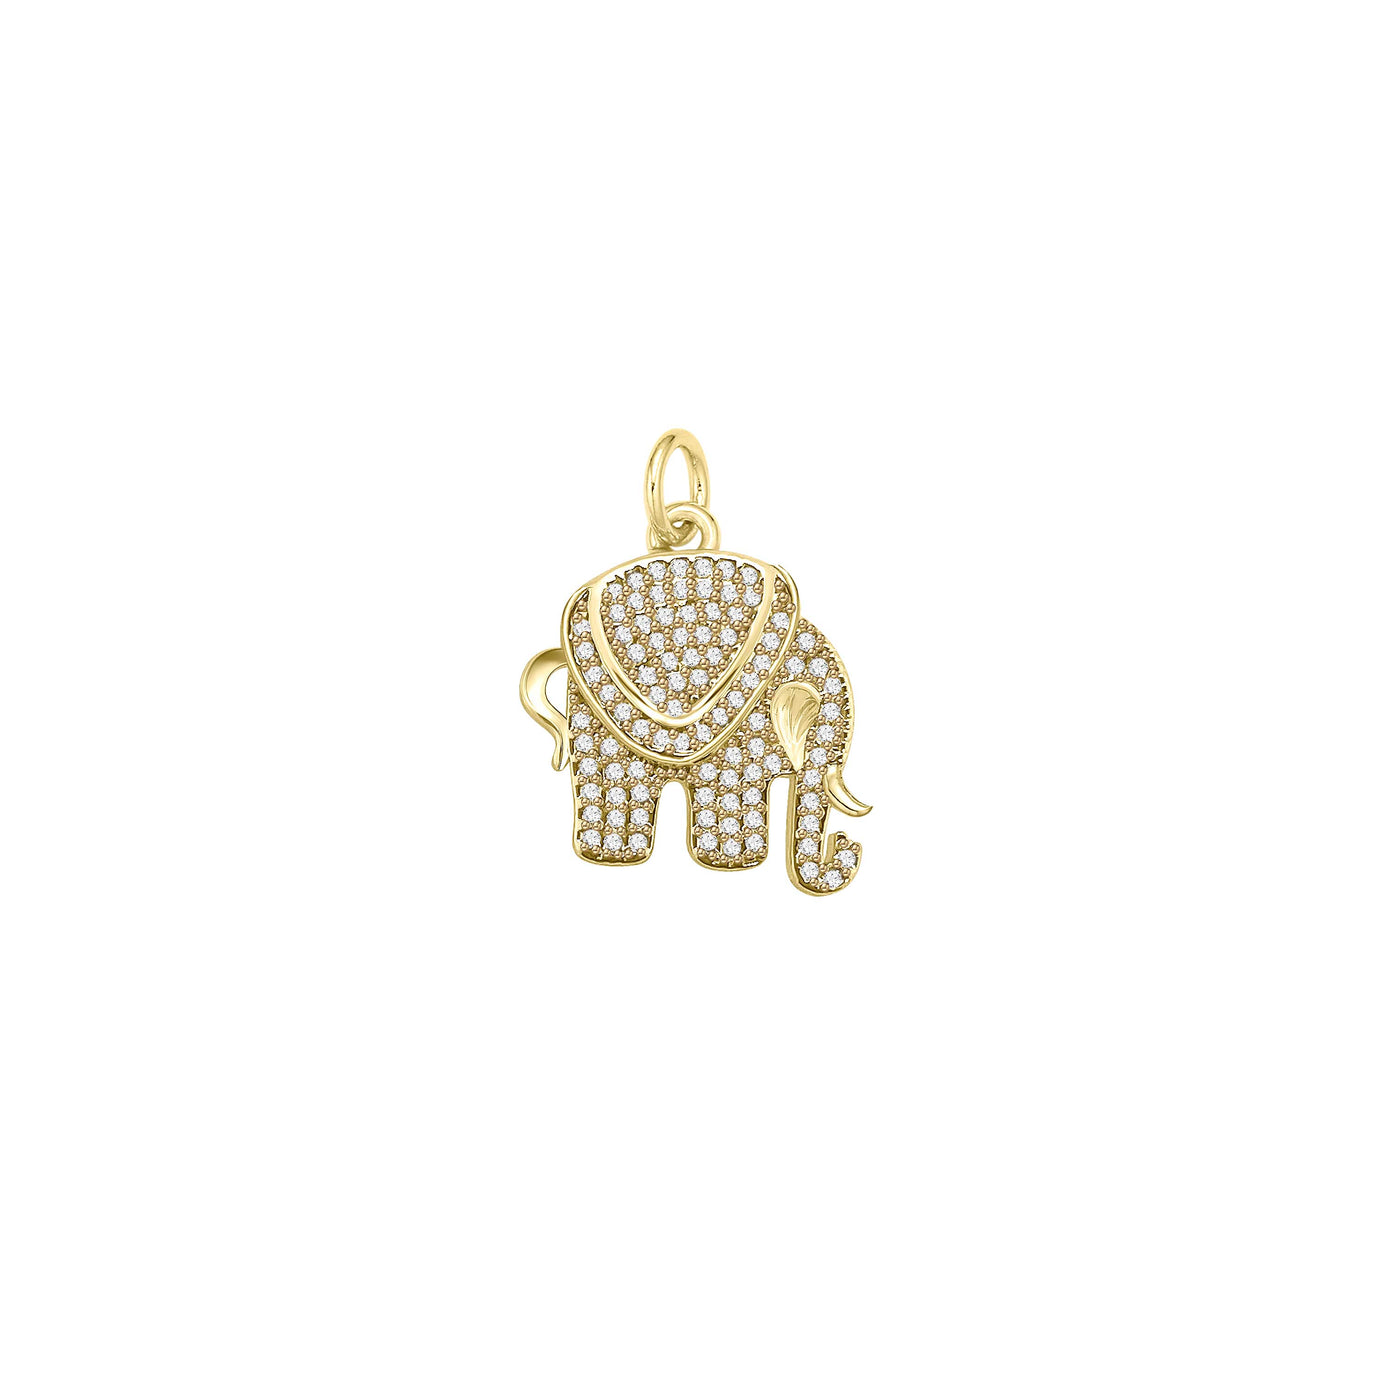 Pave CZ and Gold Elephant Charm Pendant